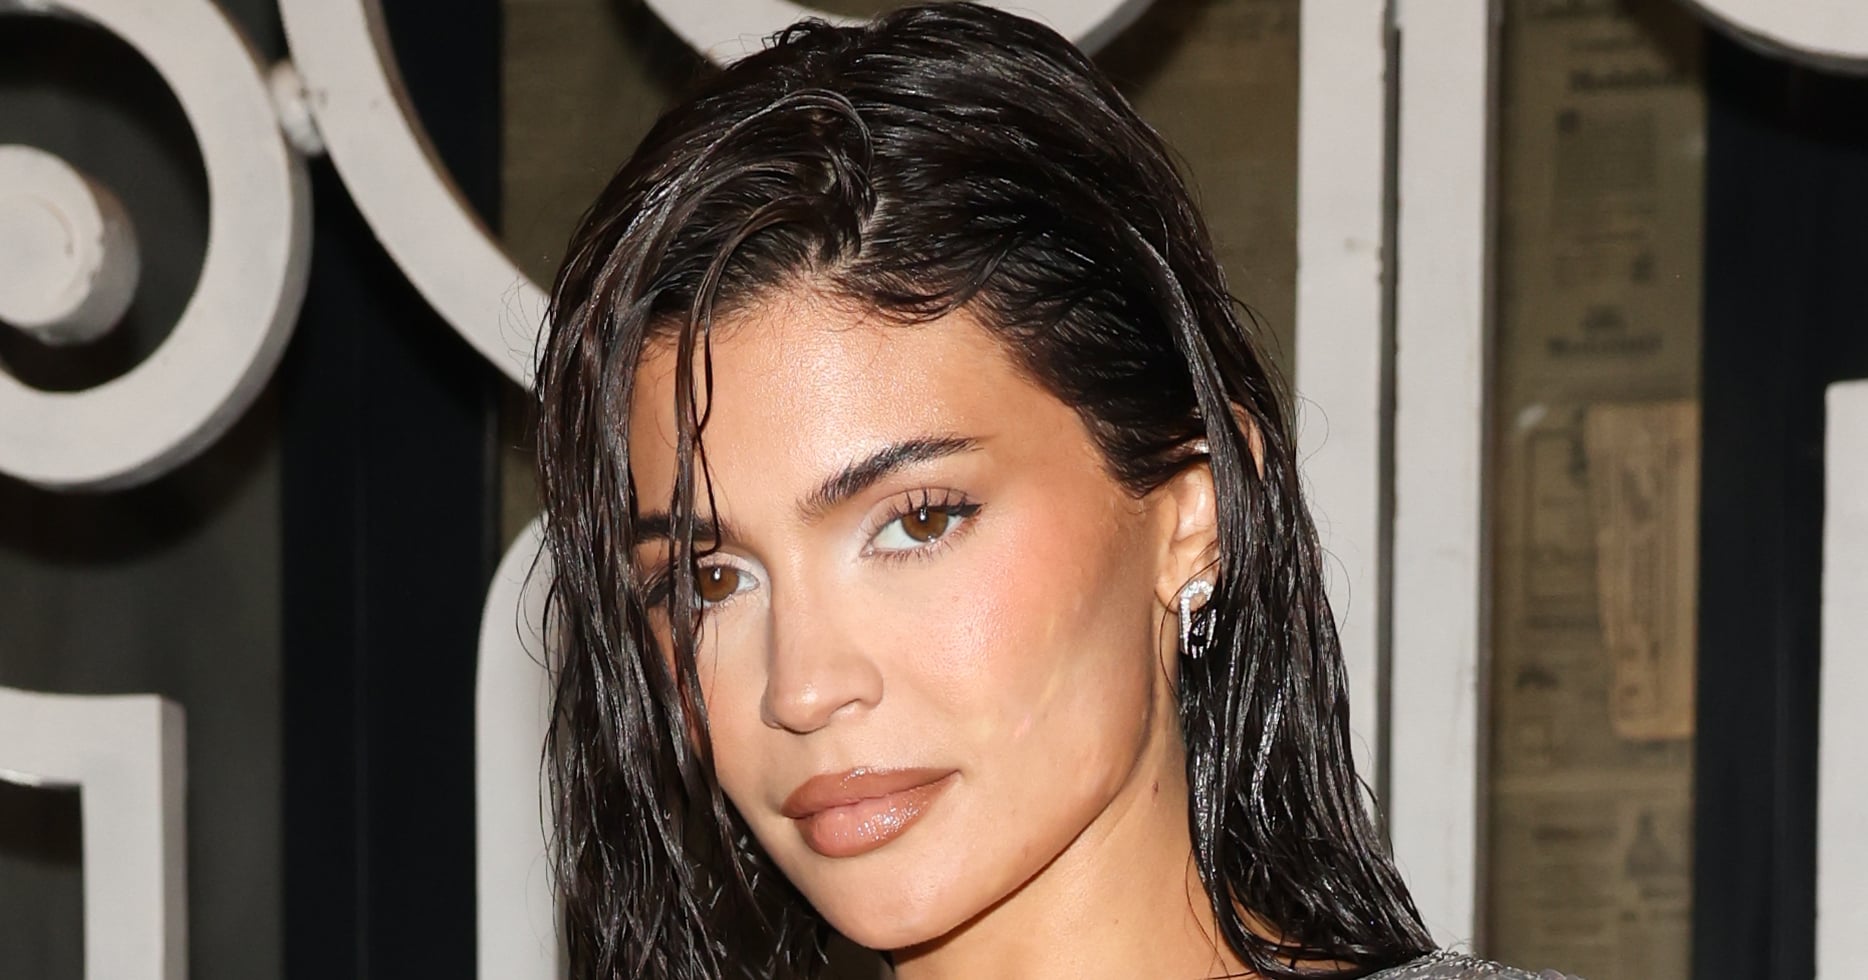 Kylie Jenner’s Influence on Toxic Beauty Standards: Opinion